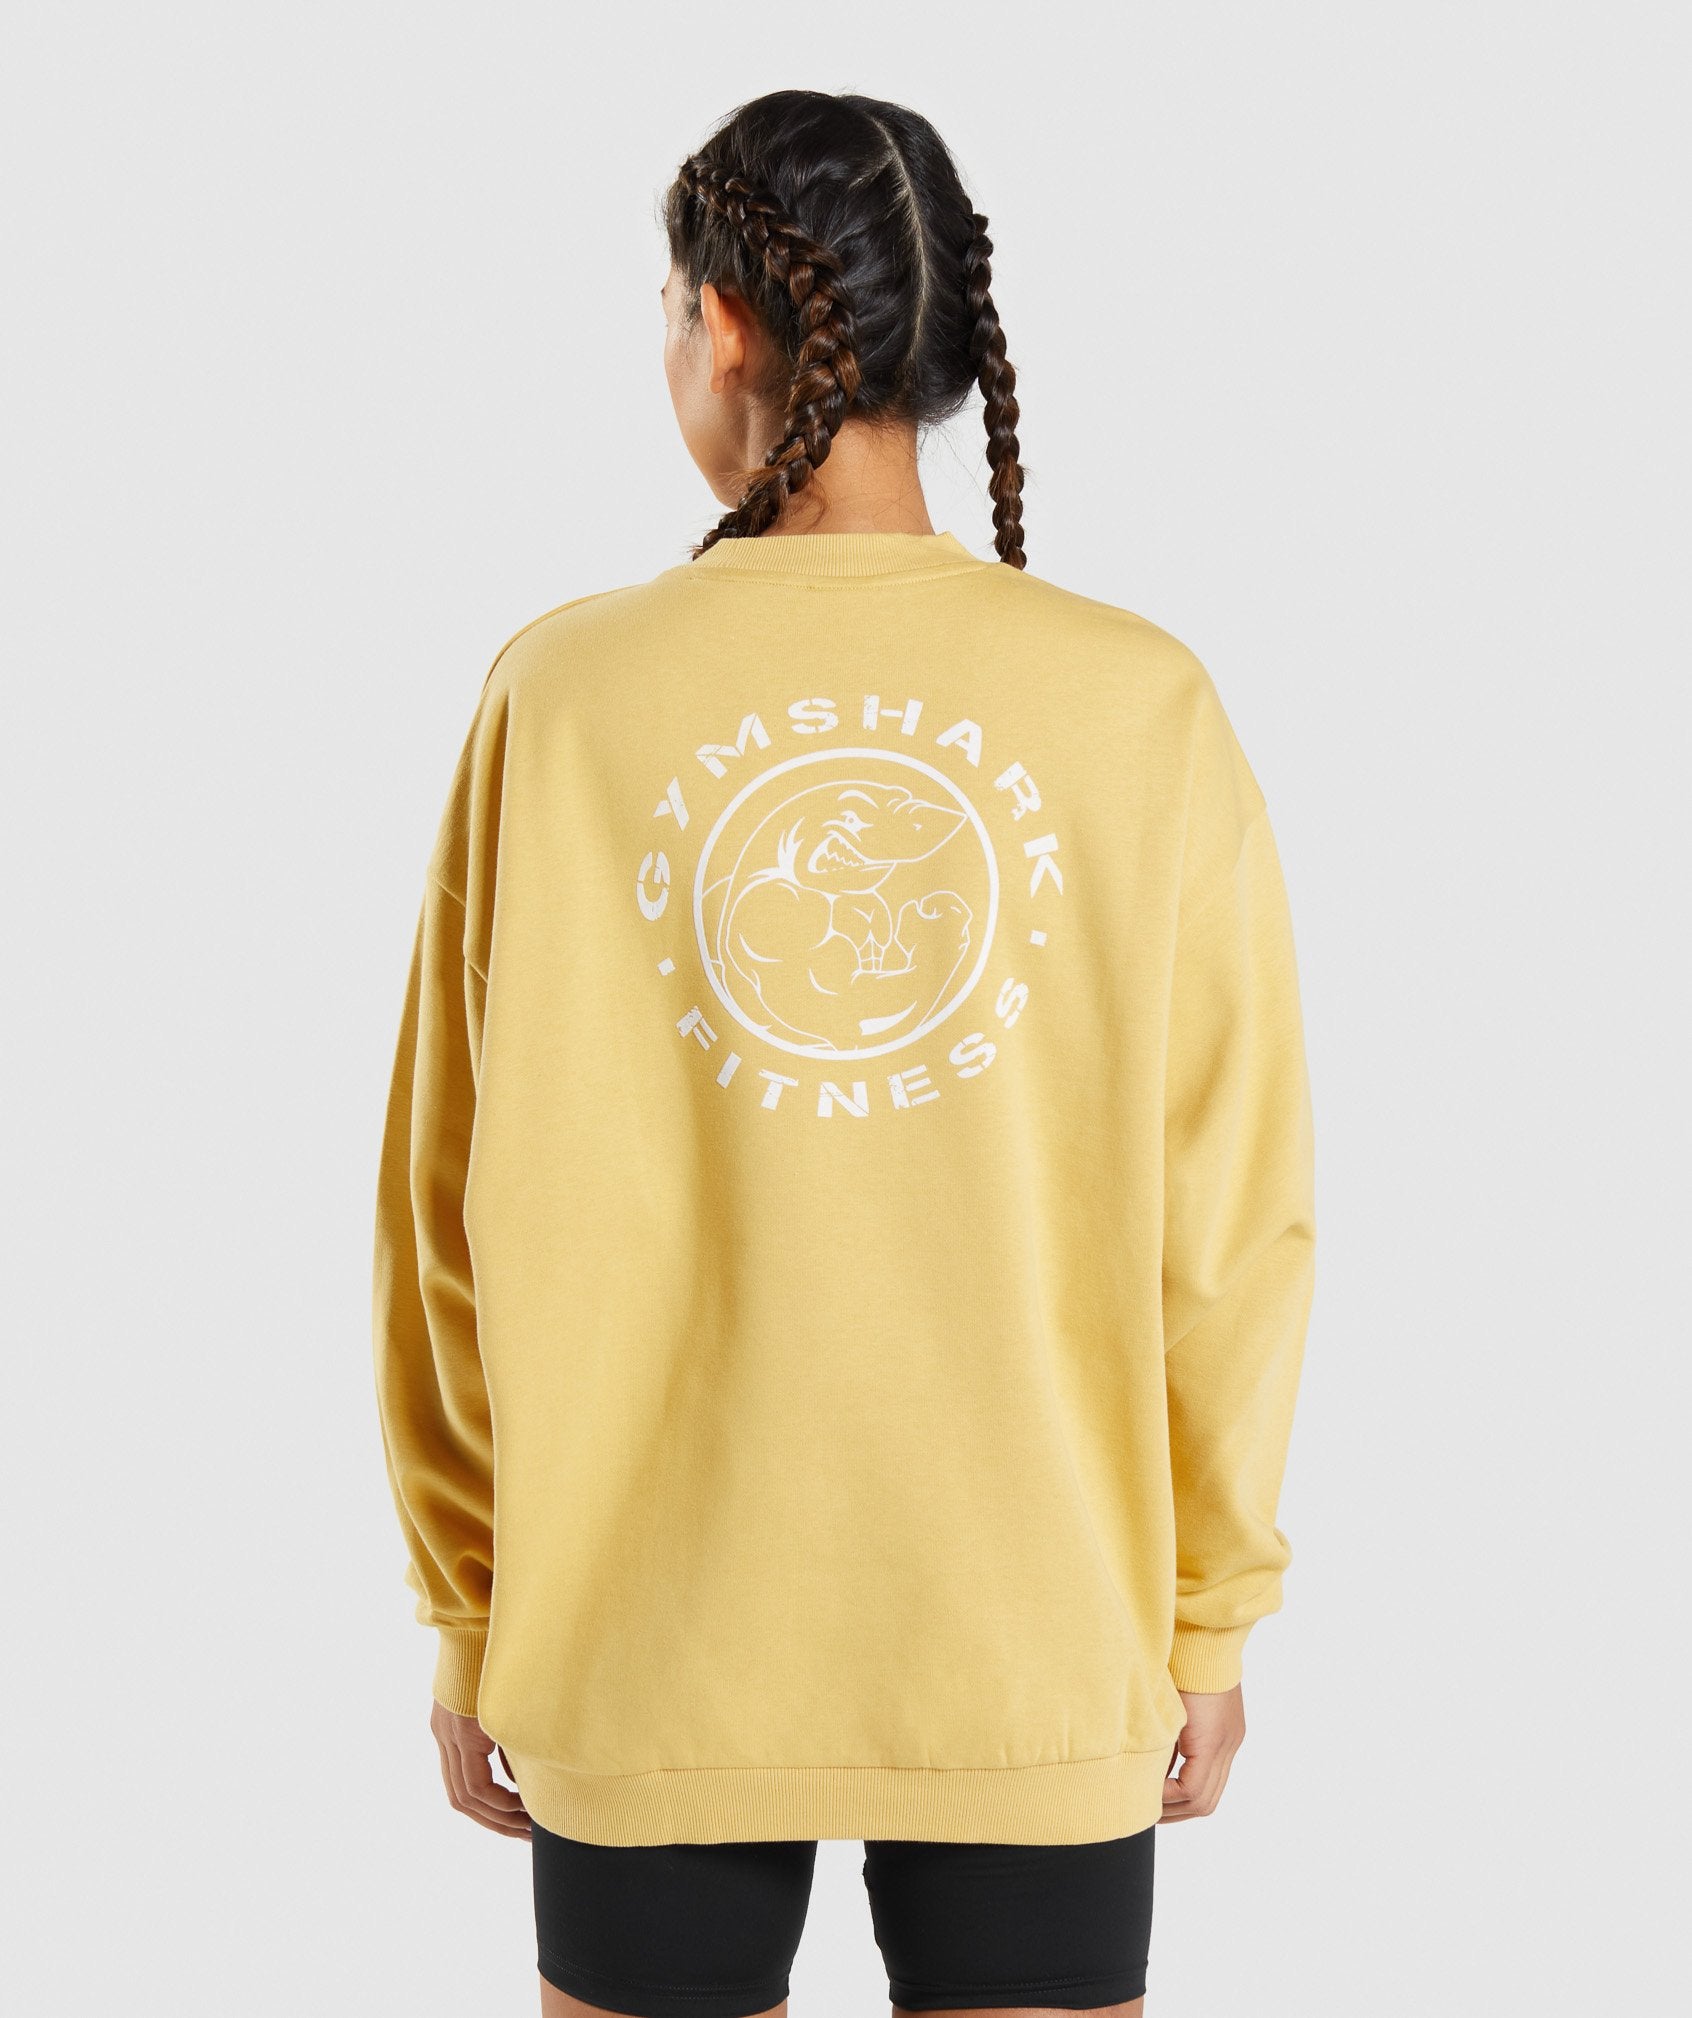 Legacy Graphic Sweatshirt in Yellow - view 2